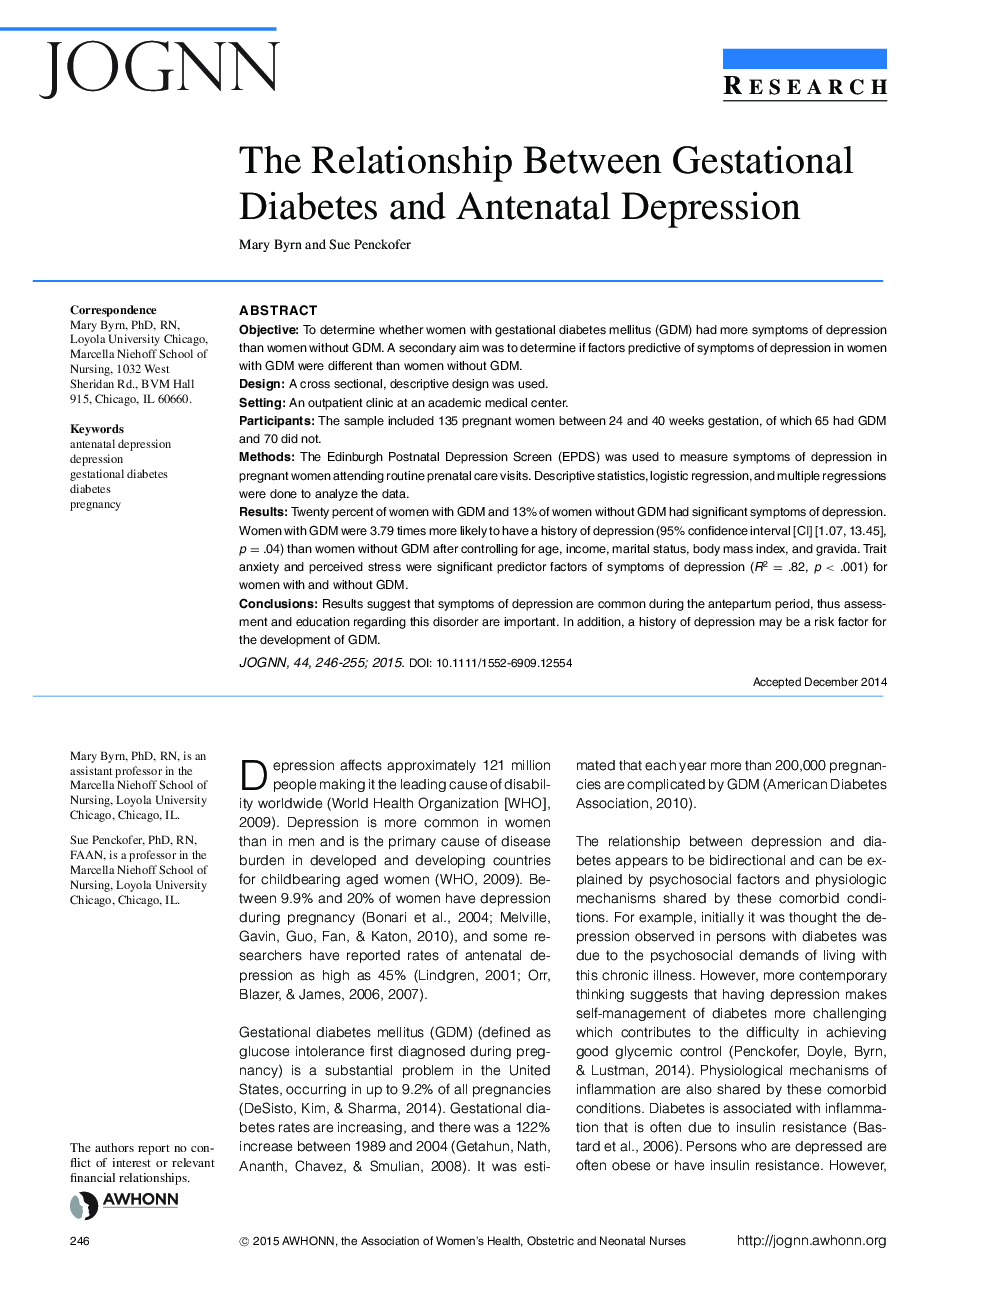 The Relationship Between Gestational Diabetes and Antenatal Depression